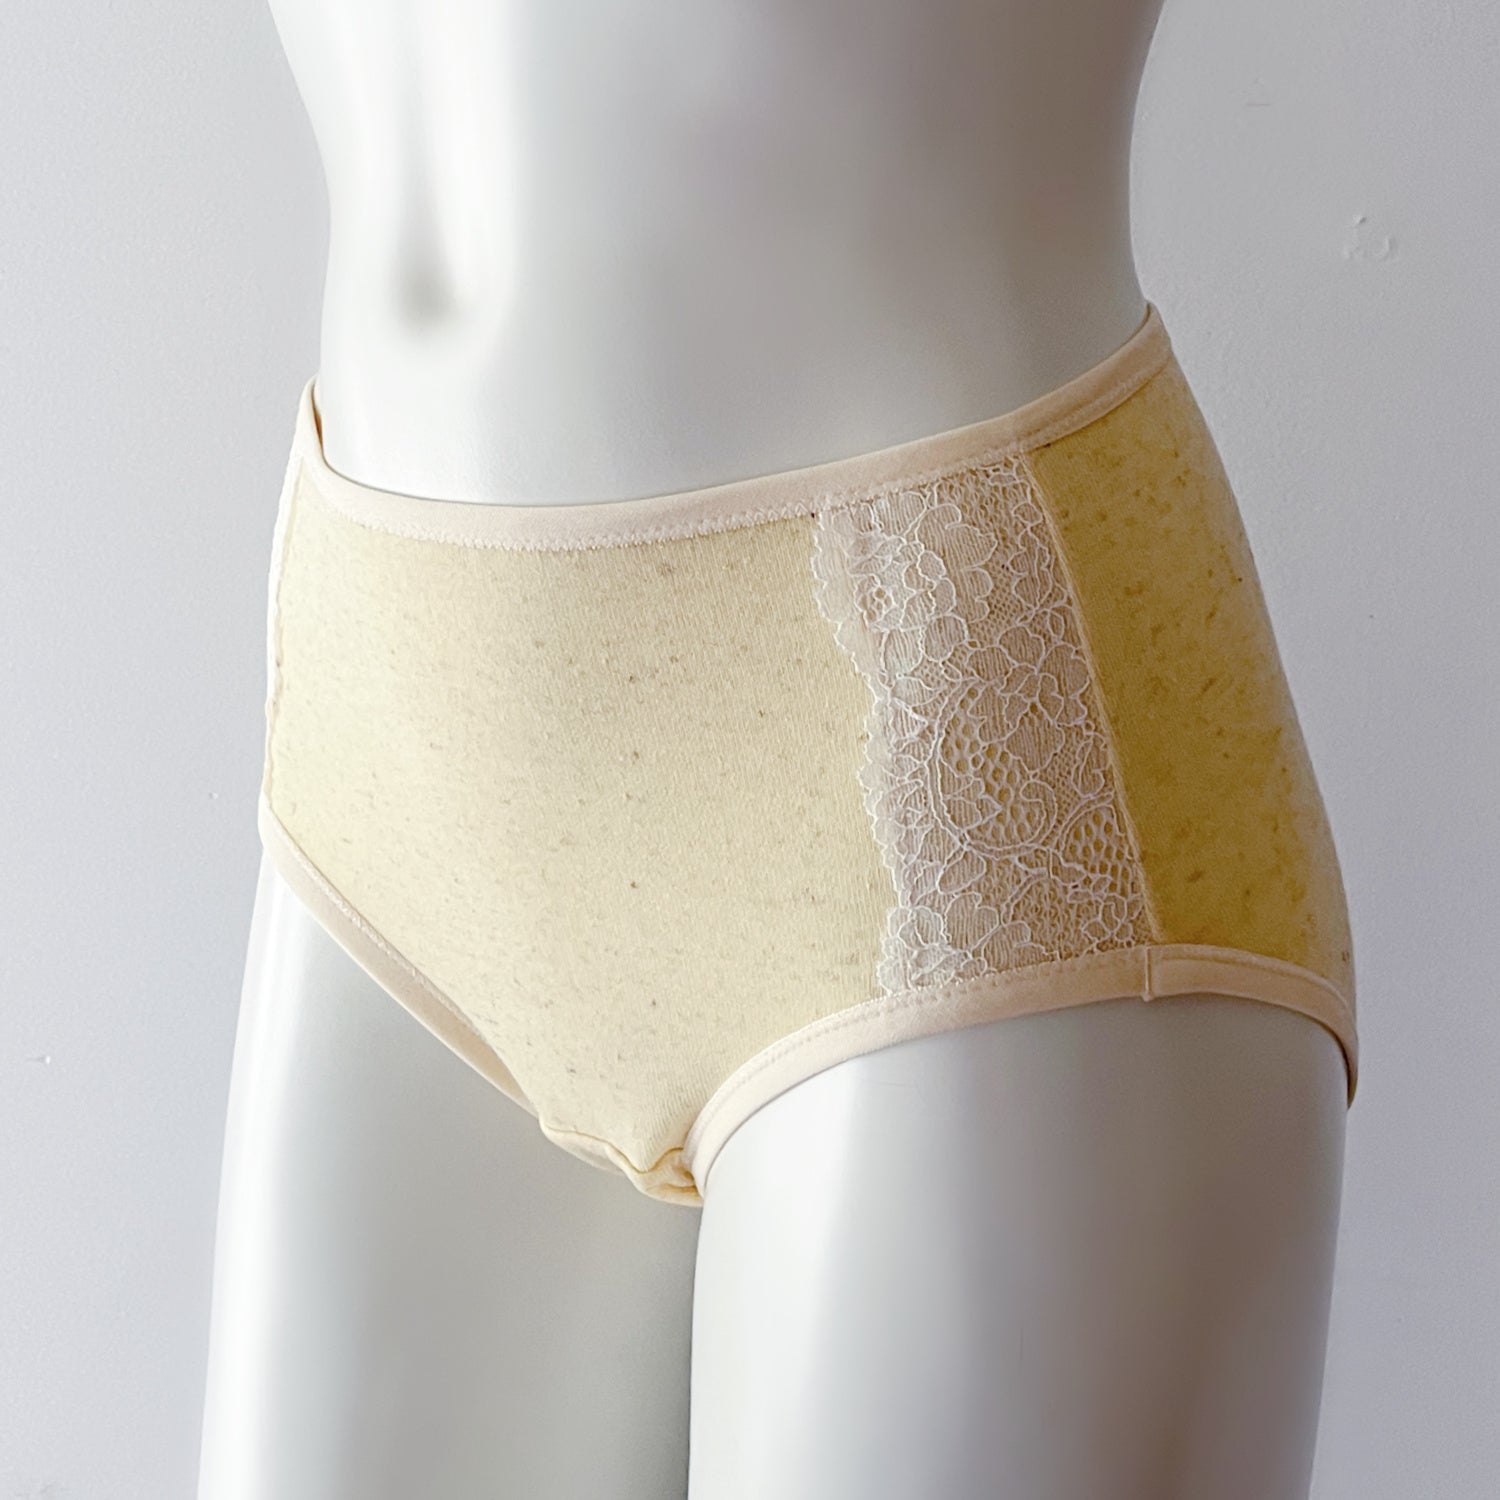 Linen panty brief women's, Shop 100% linen underwear